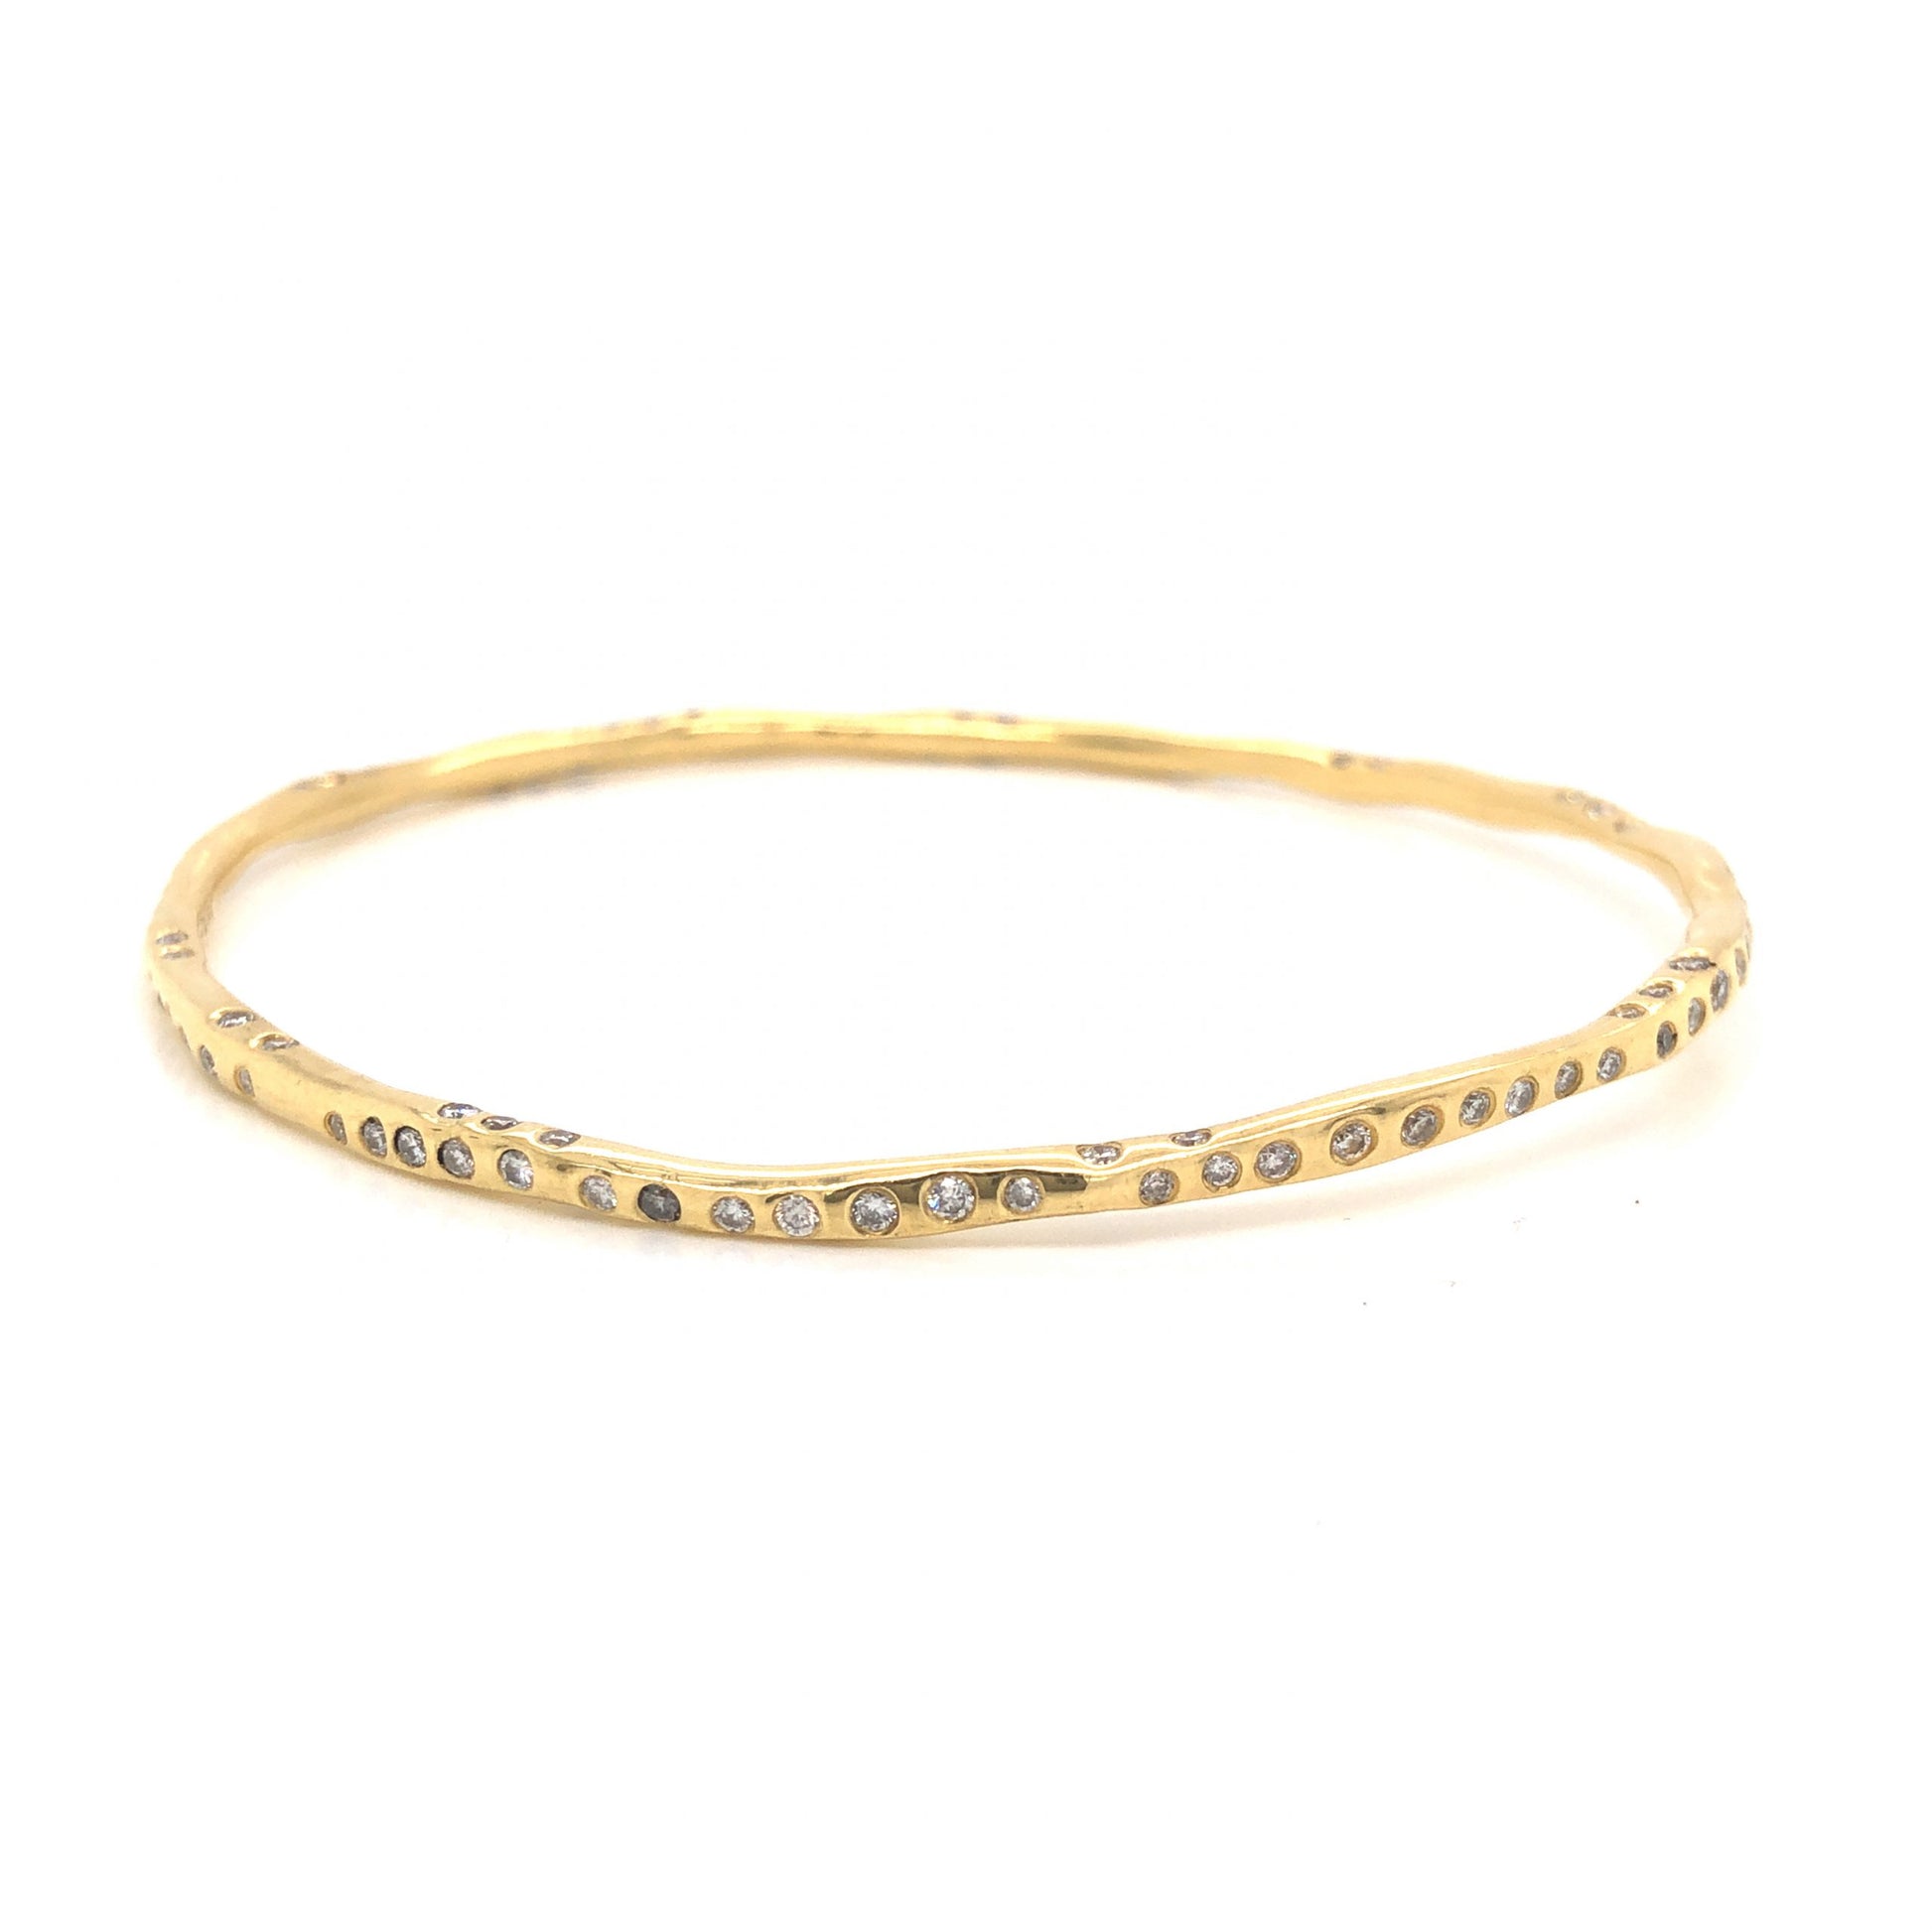 1.49 Ippolita Superstar Diamond Bangle Bracelet in 18k Yellow Gold